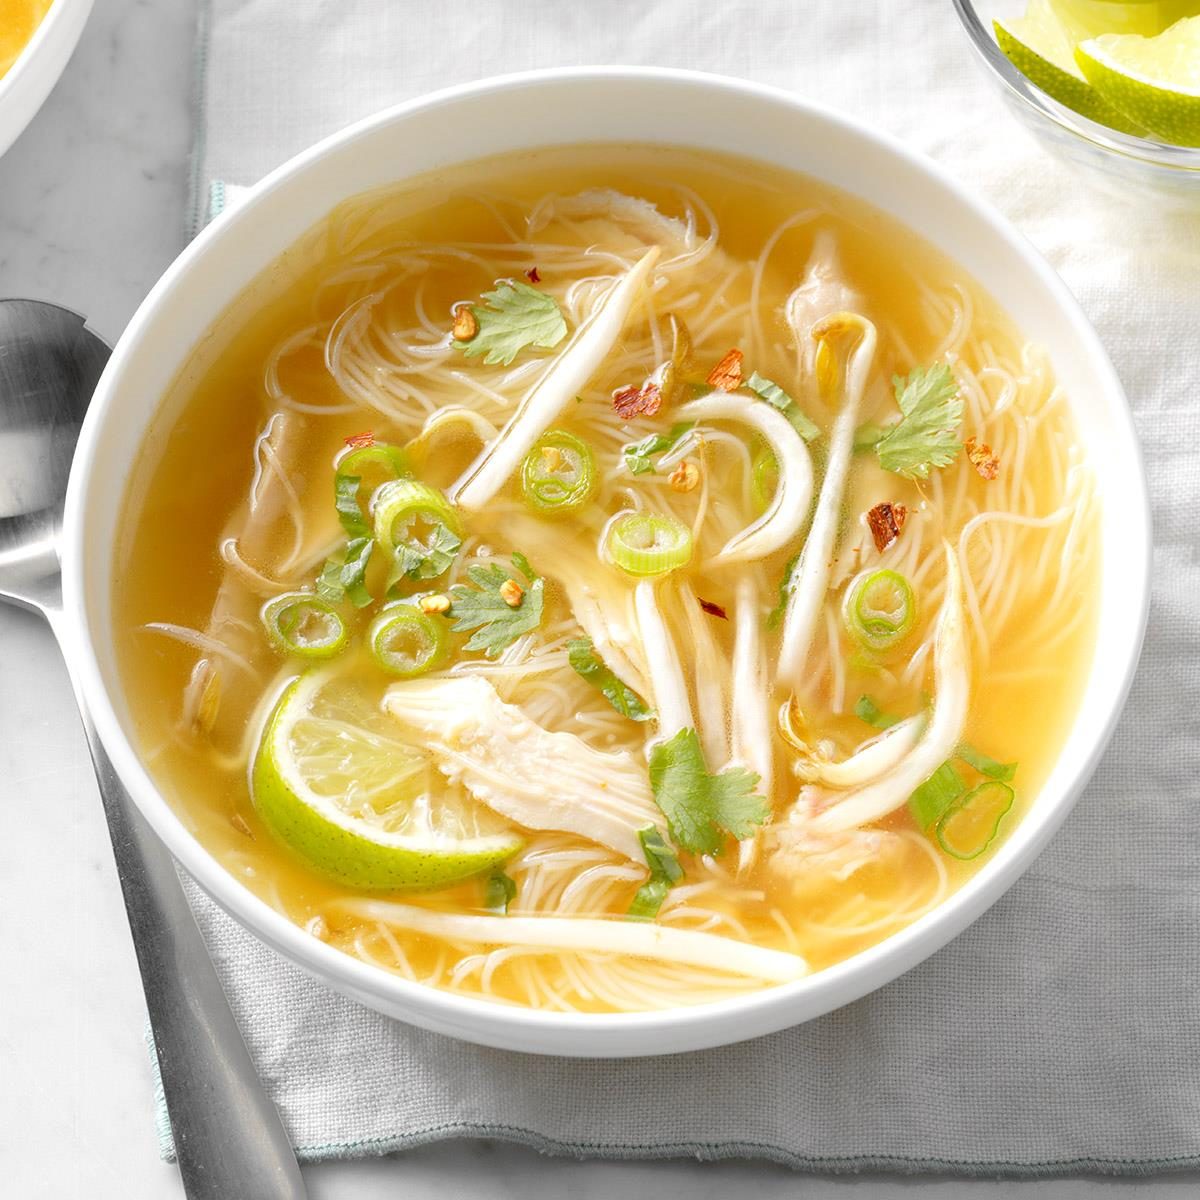 https://www.tasteofhome.com/wp-content/uploads/2018/01/Thai-Chicken-Noodle-Soup_EXPS_EDSC17_196599_B03_16_4b-18.jpg